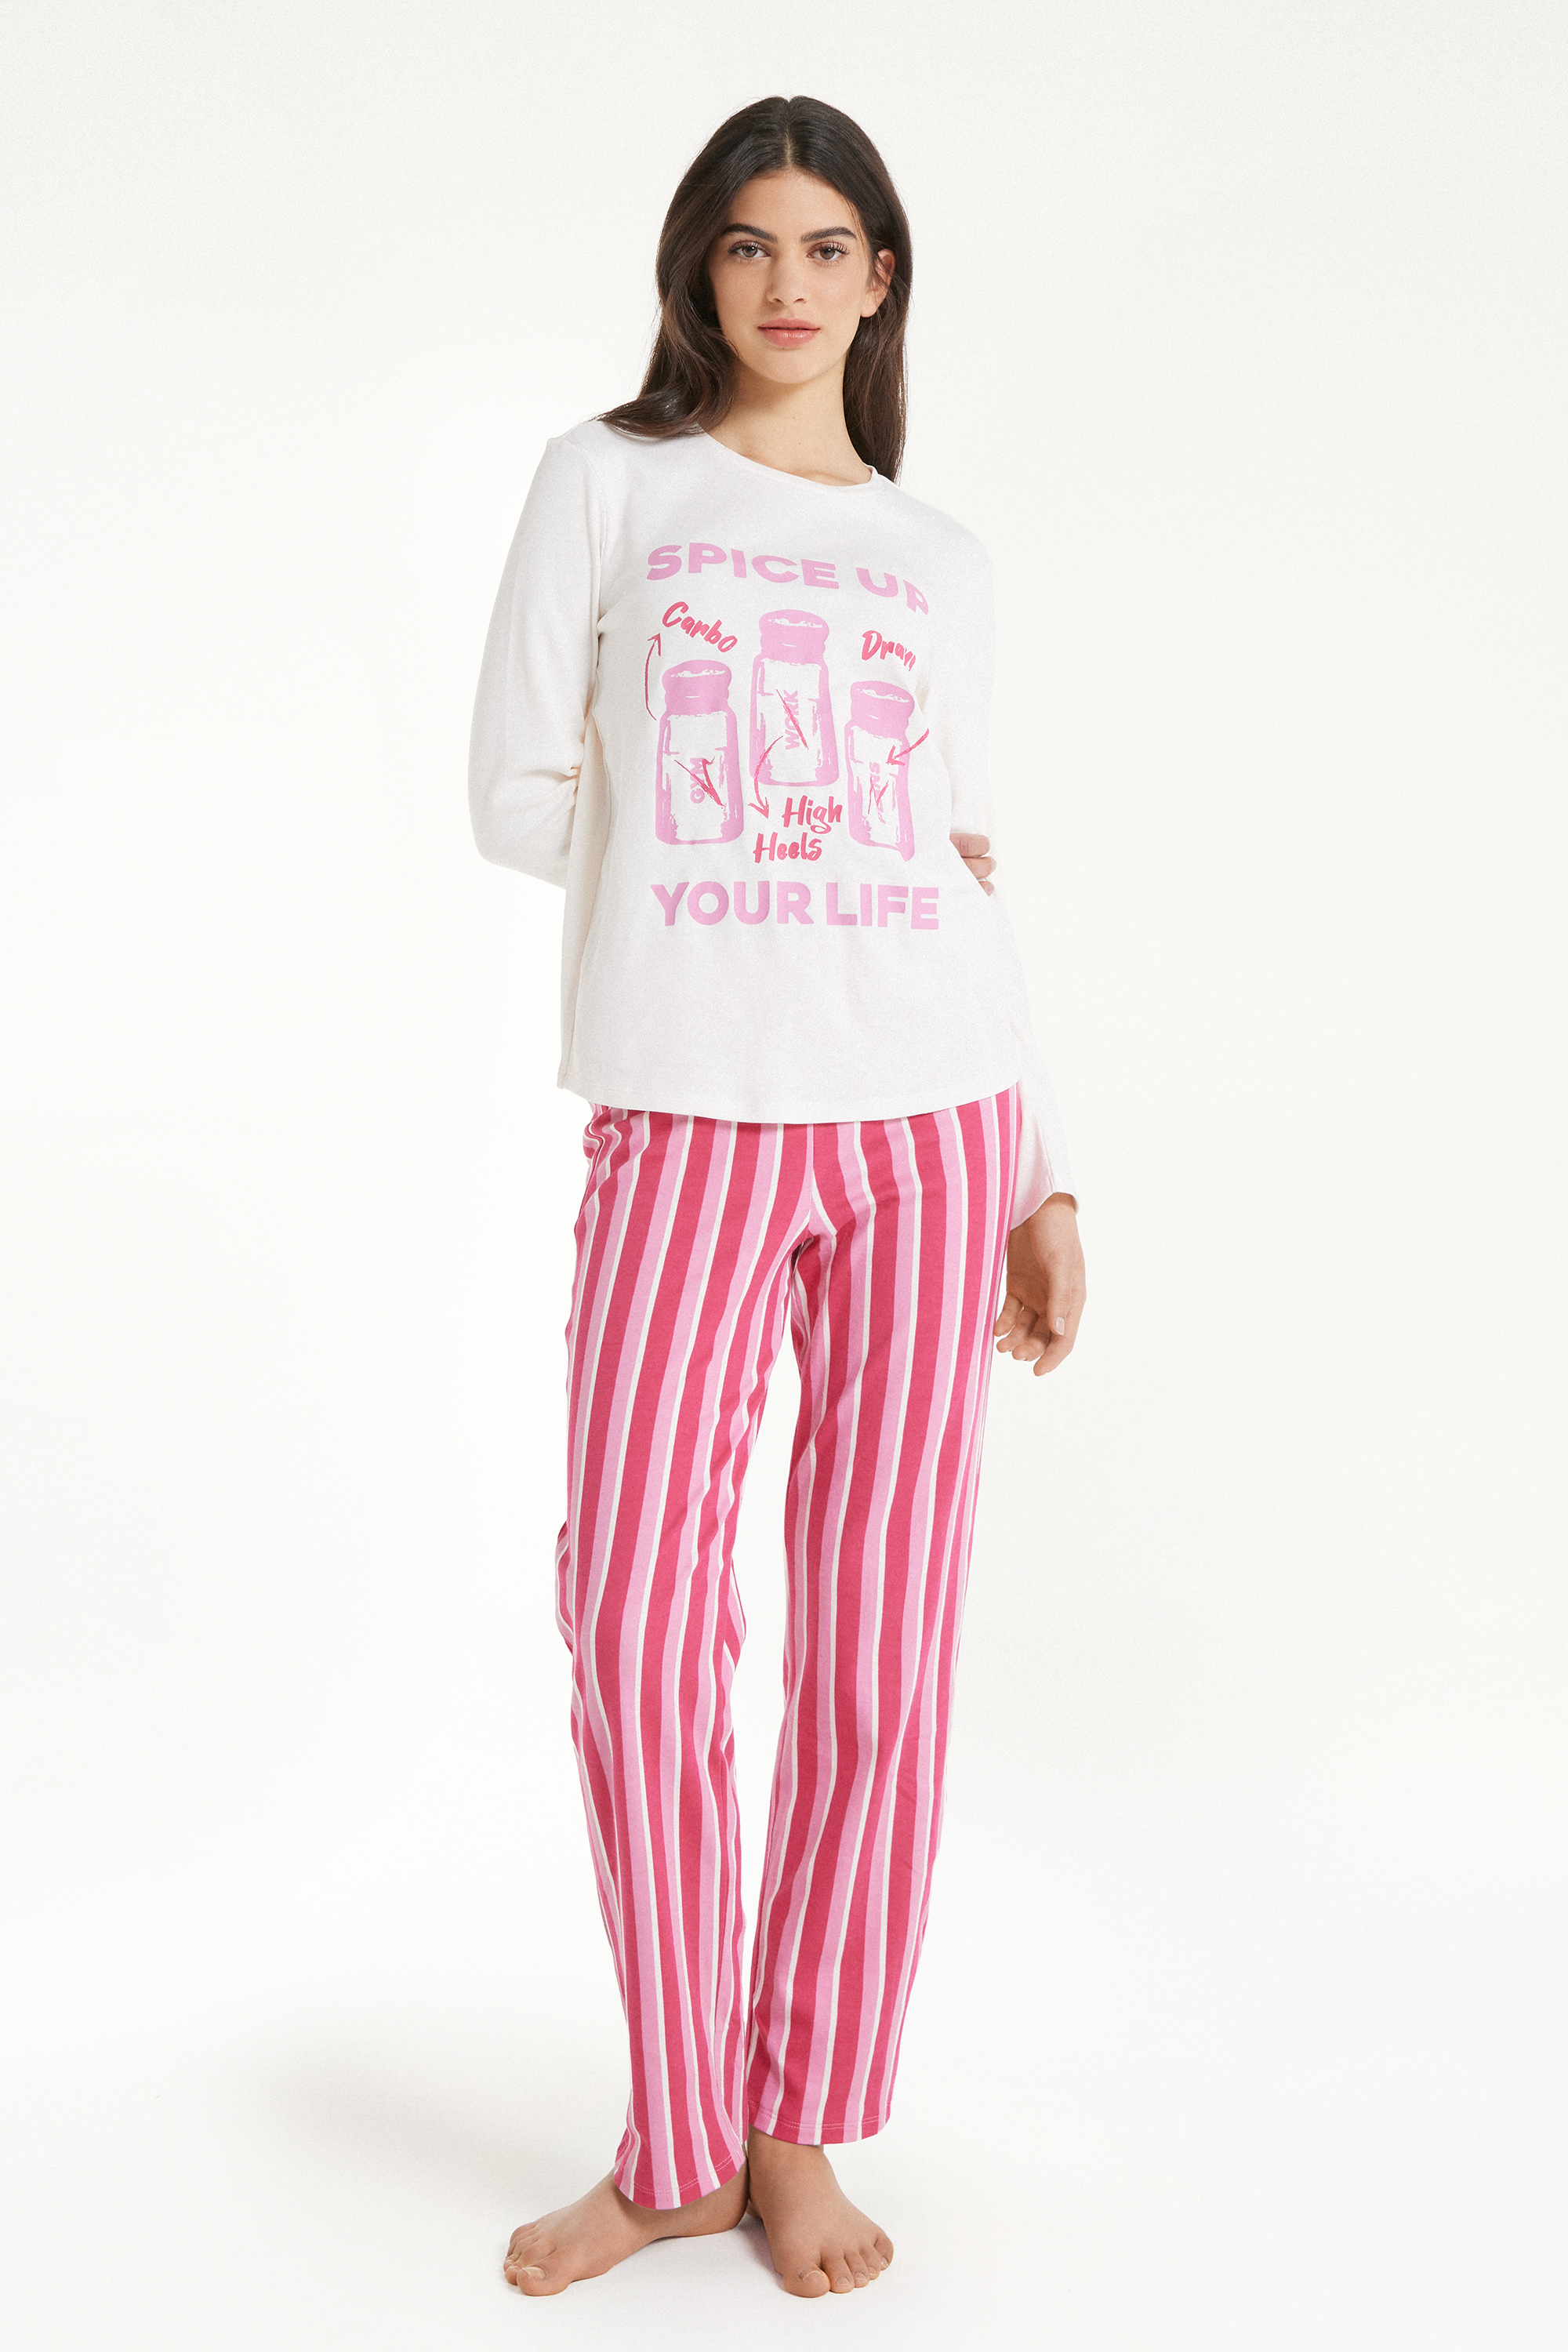 Long Heavy Cotton Pyjamas with "Spice Up" Print